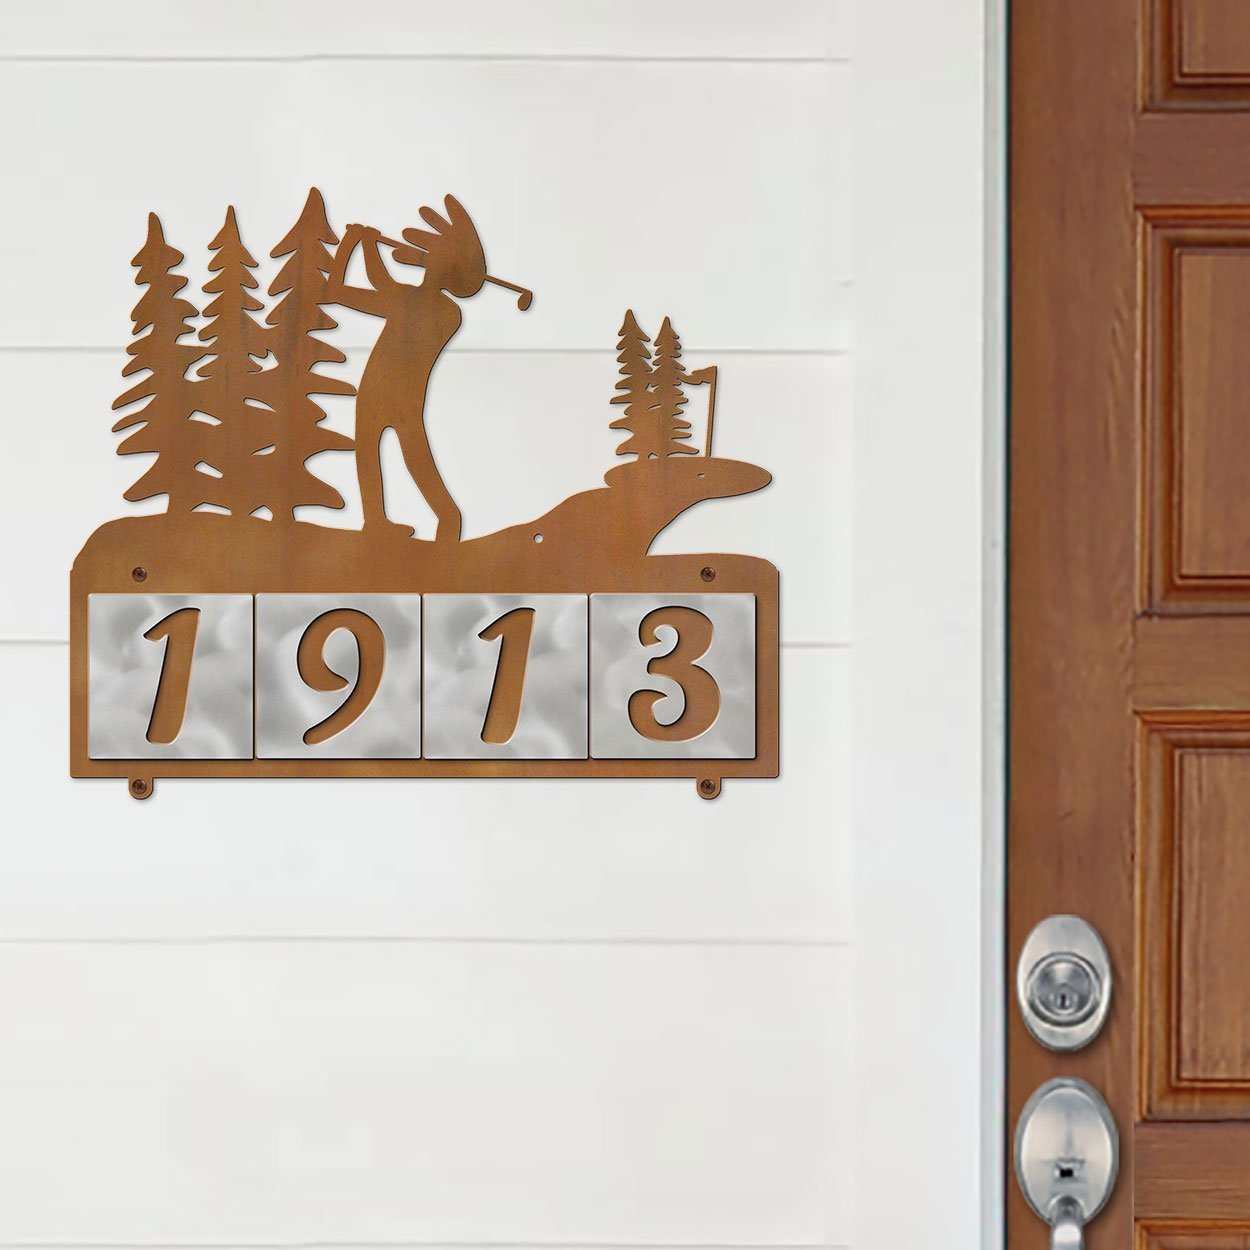 607144 - Kokopelli Golfer in the Woods Design 4-Digit Horizontal 4-inch Tile Outdoor House Numbers